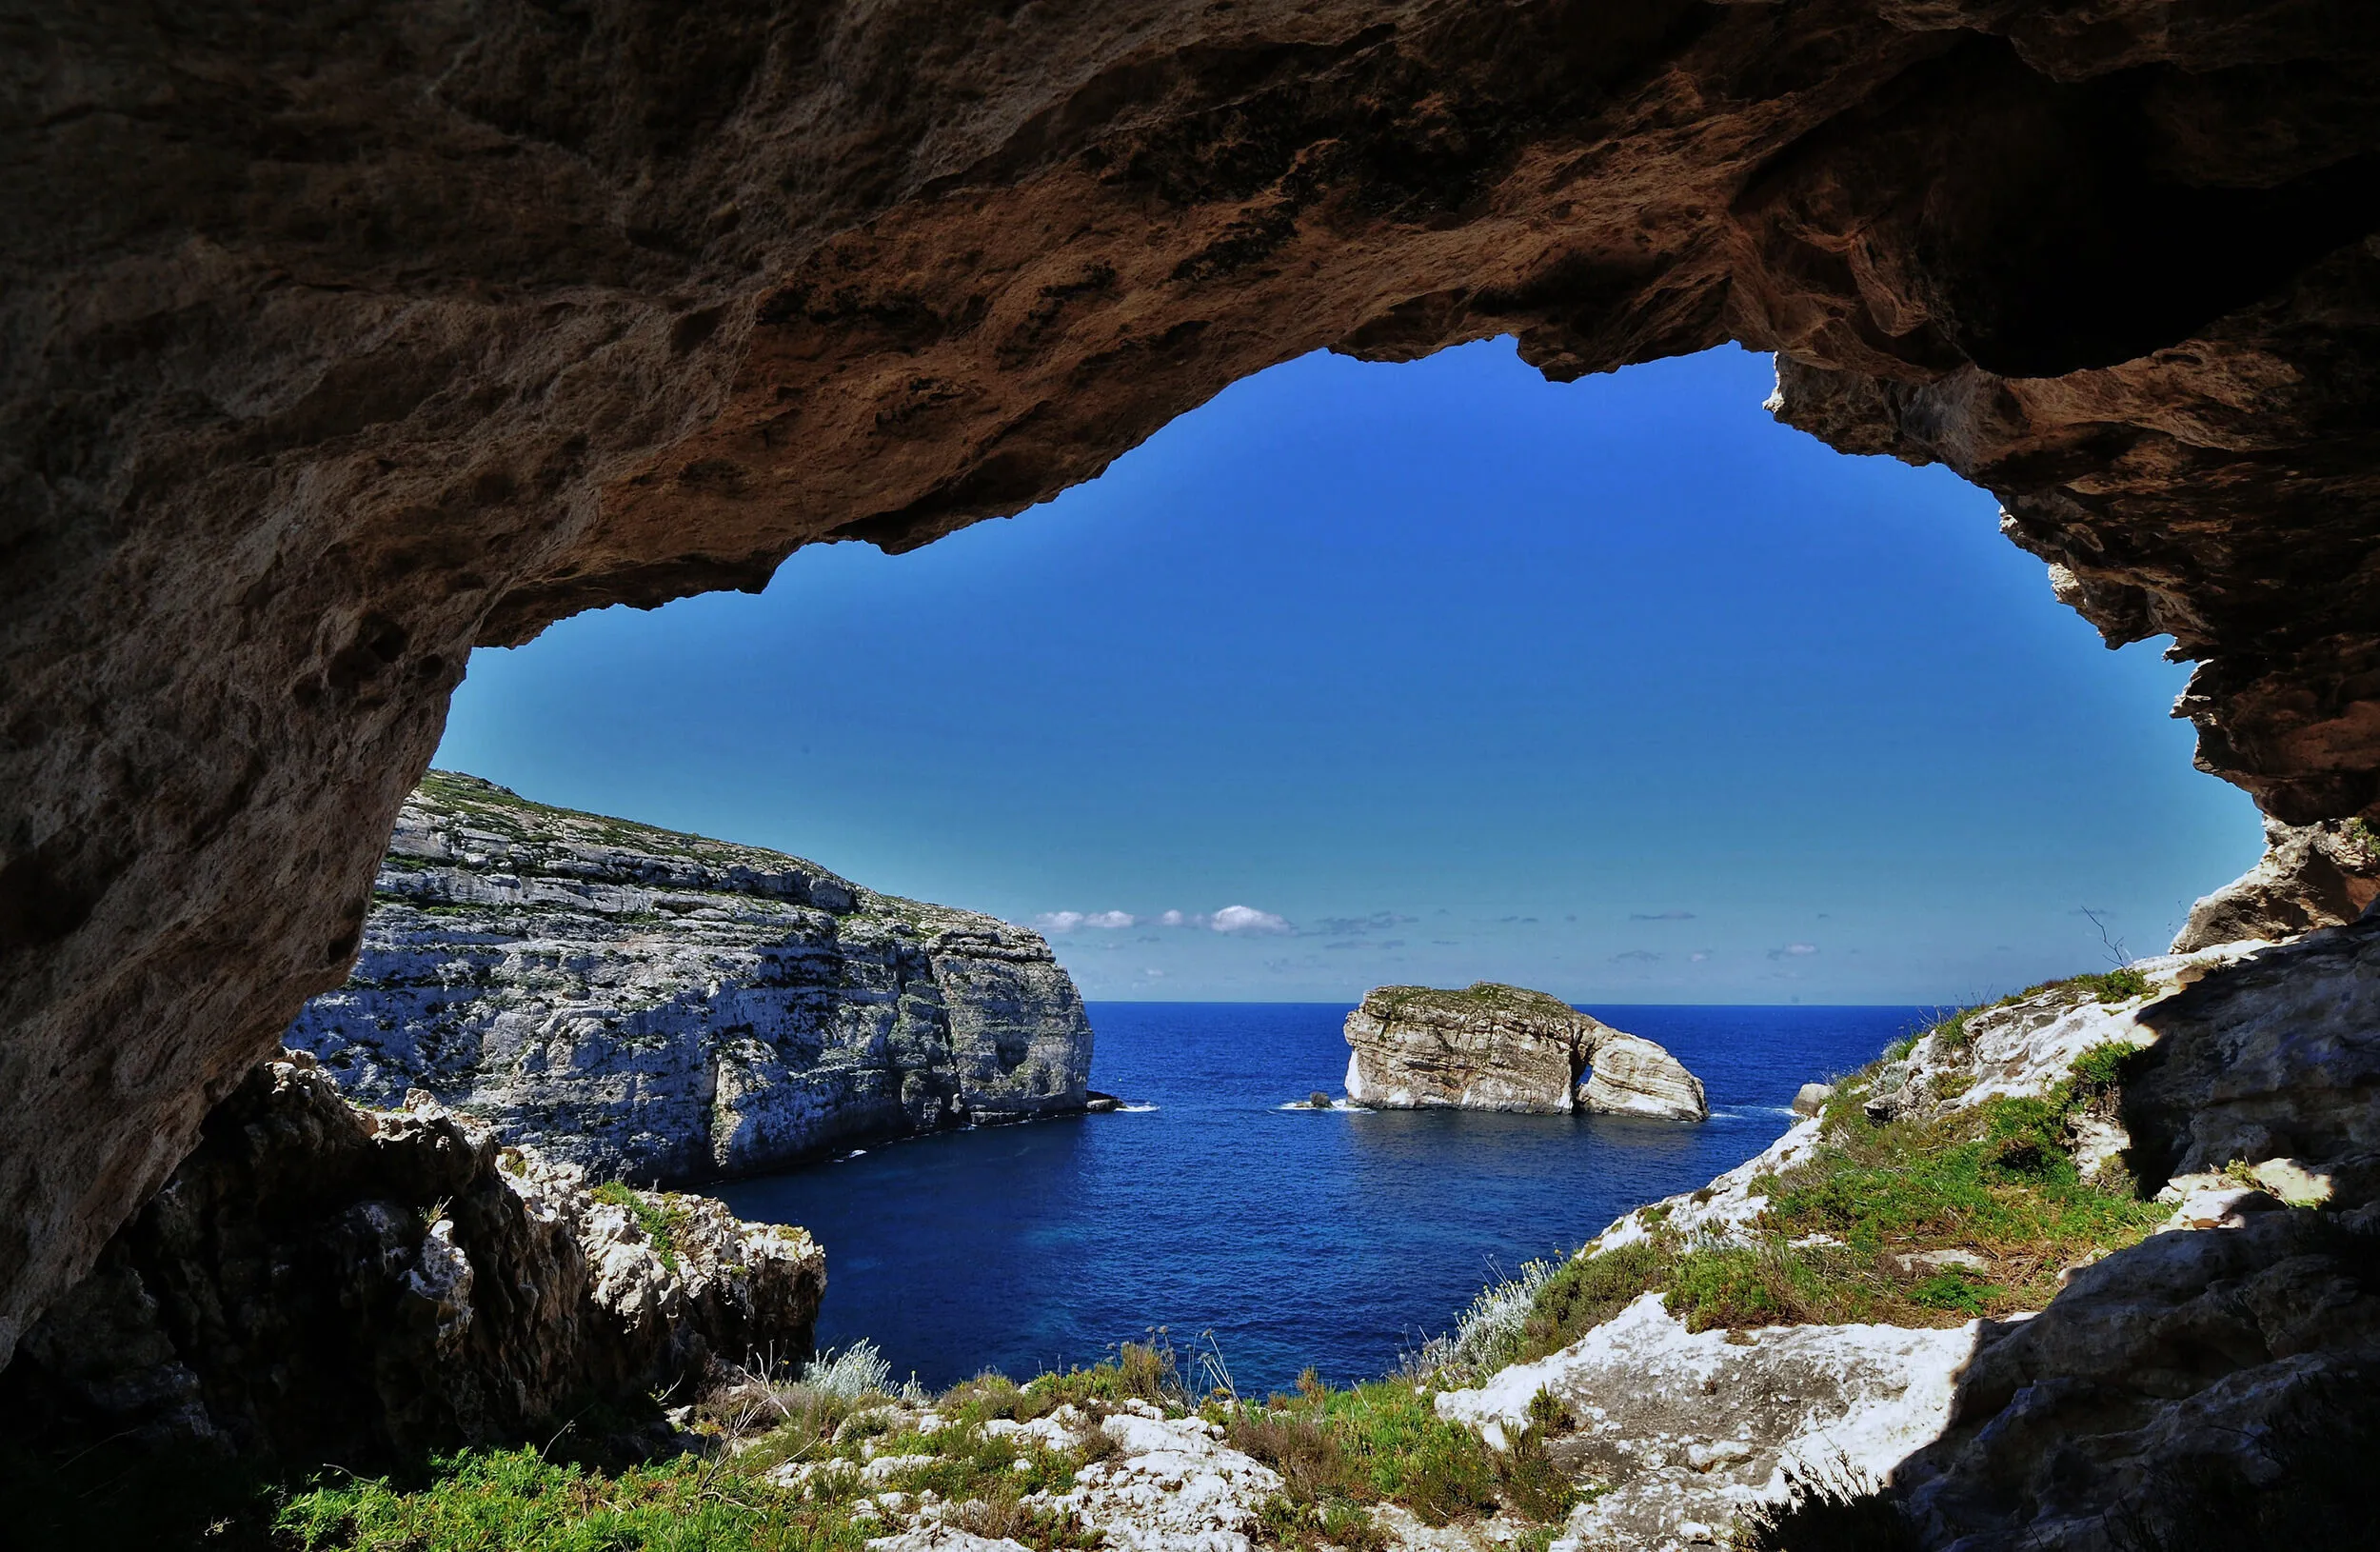 Dwejra Bay in Malta, Europe | Nature Reserves,Diving,Scuba Diving - Rated 1